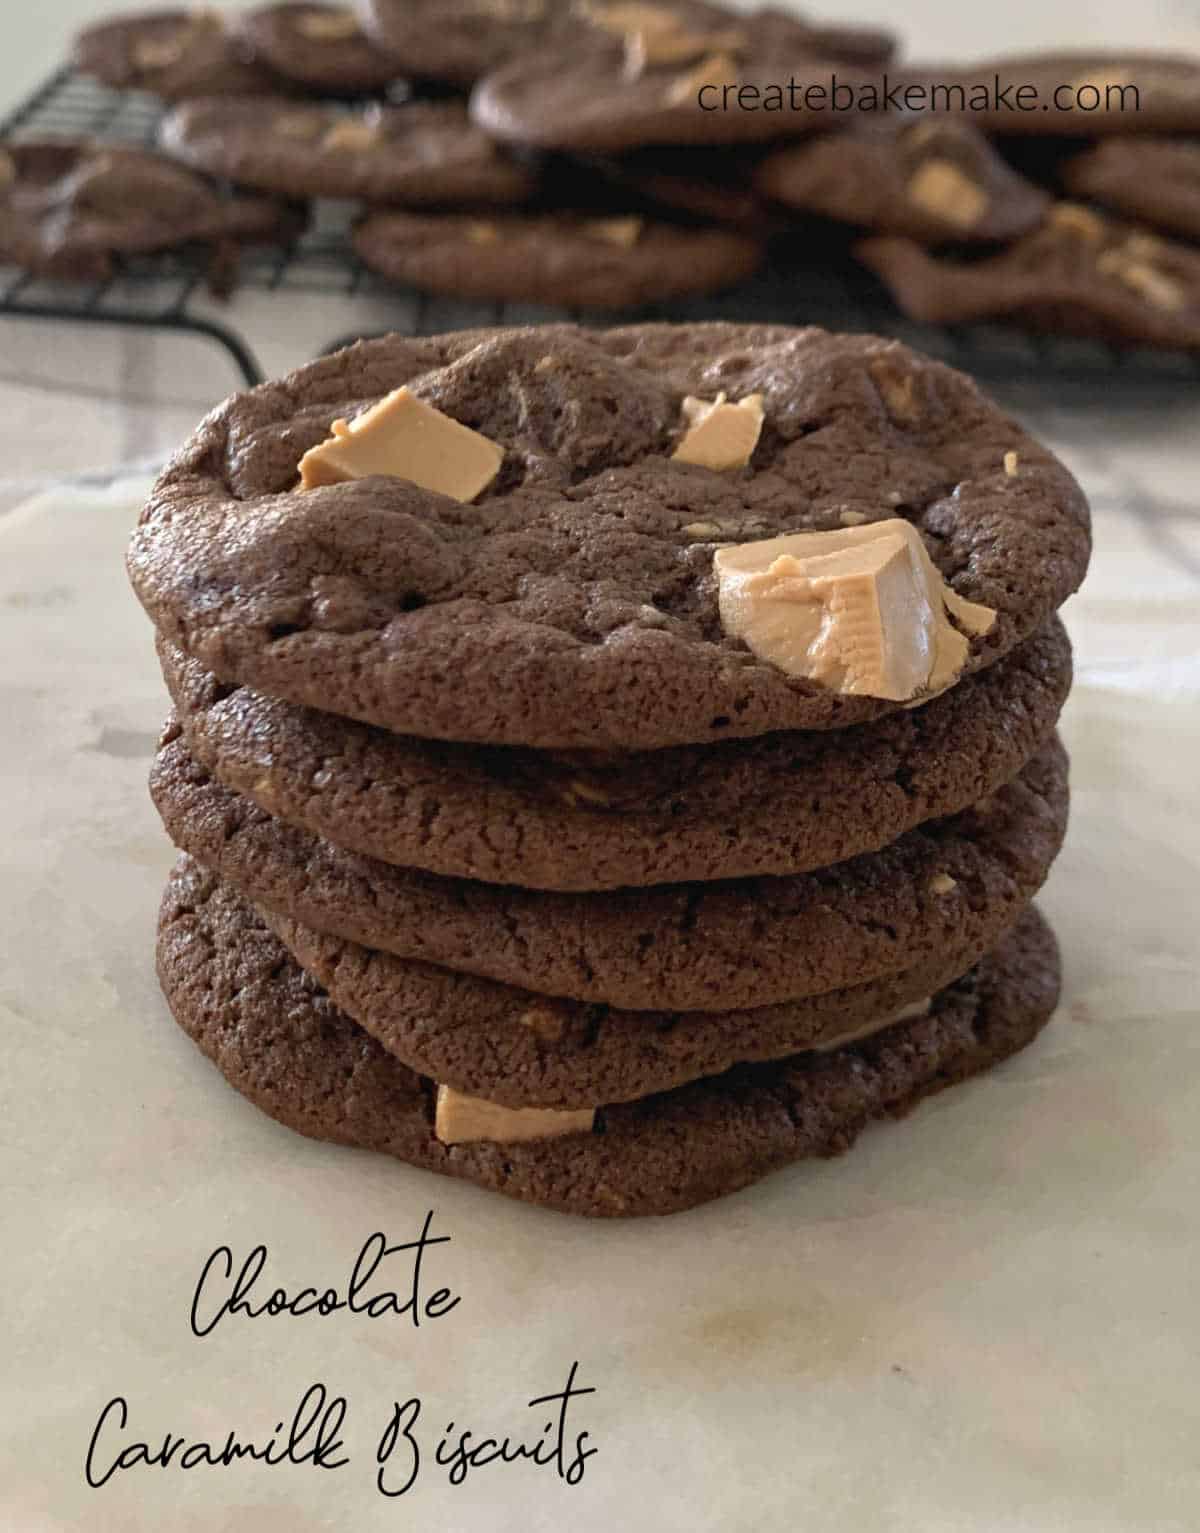 Chocolate Caramilk Biscuits Close Up